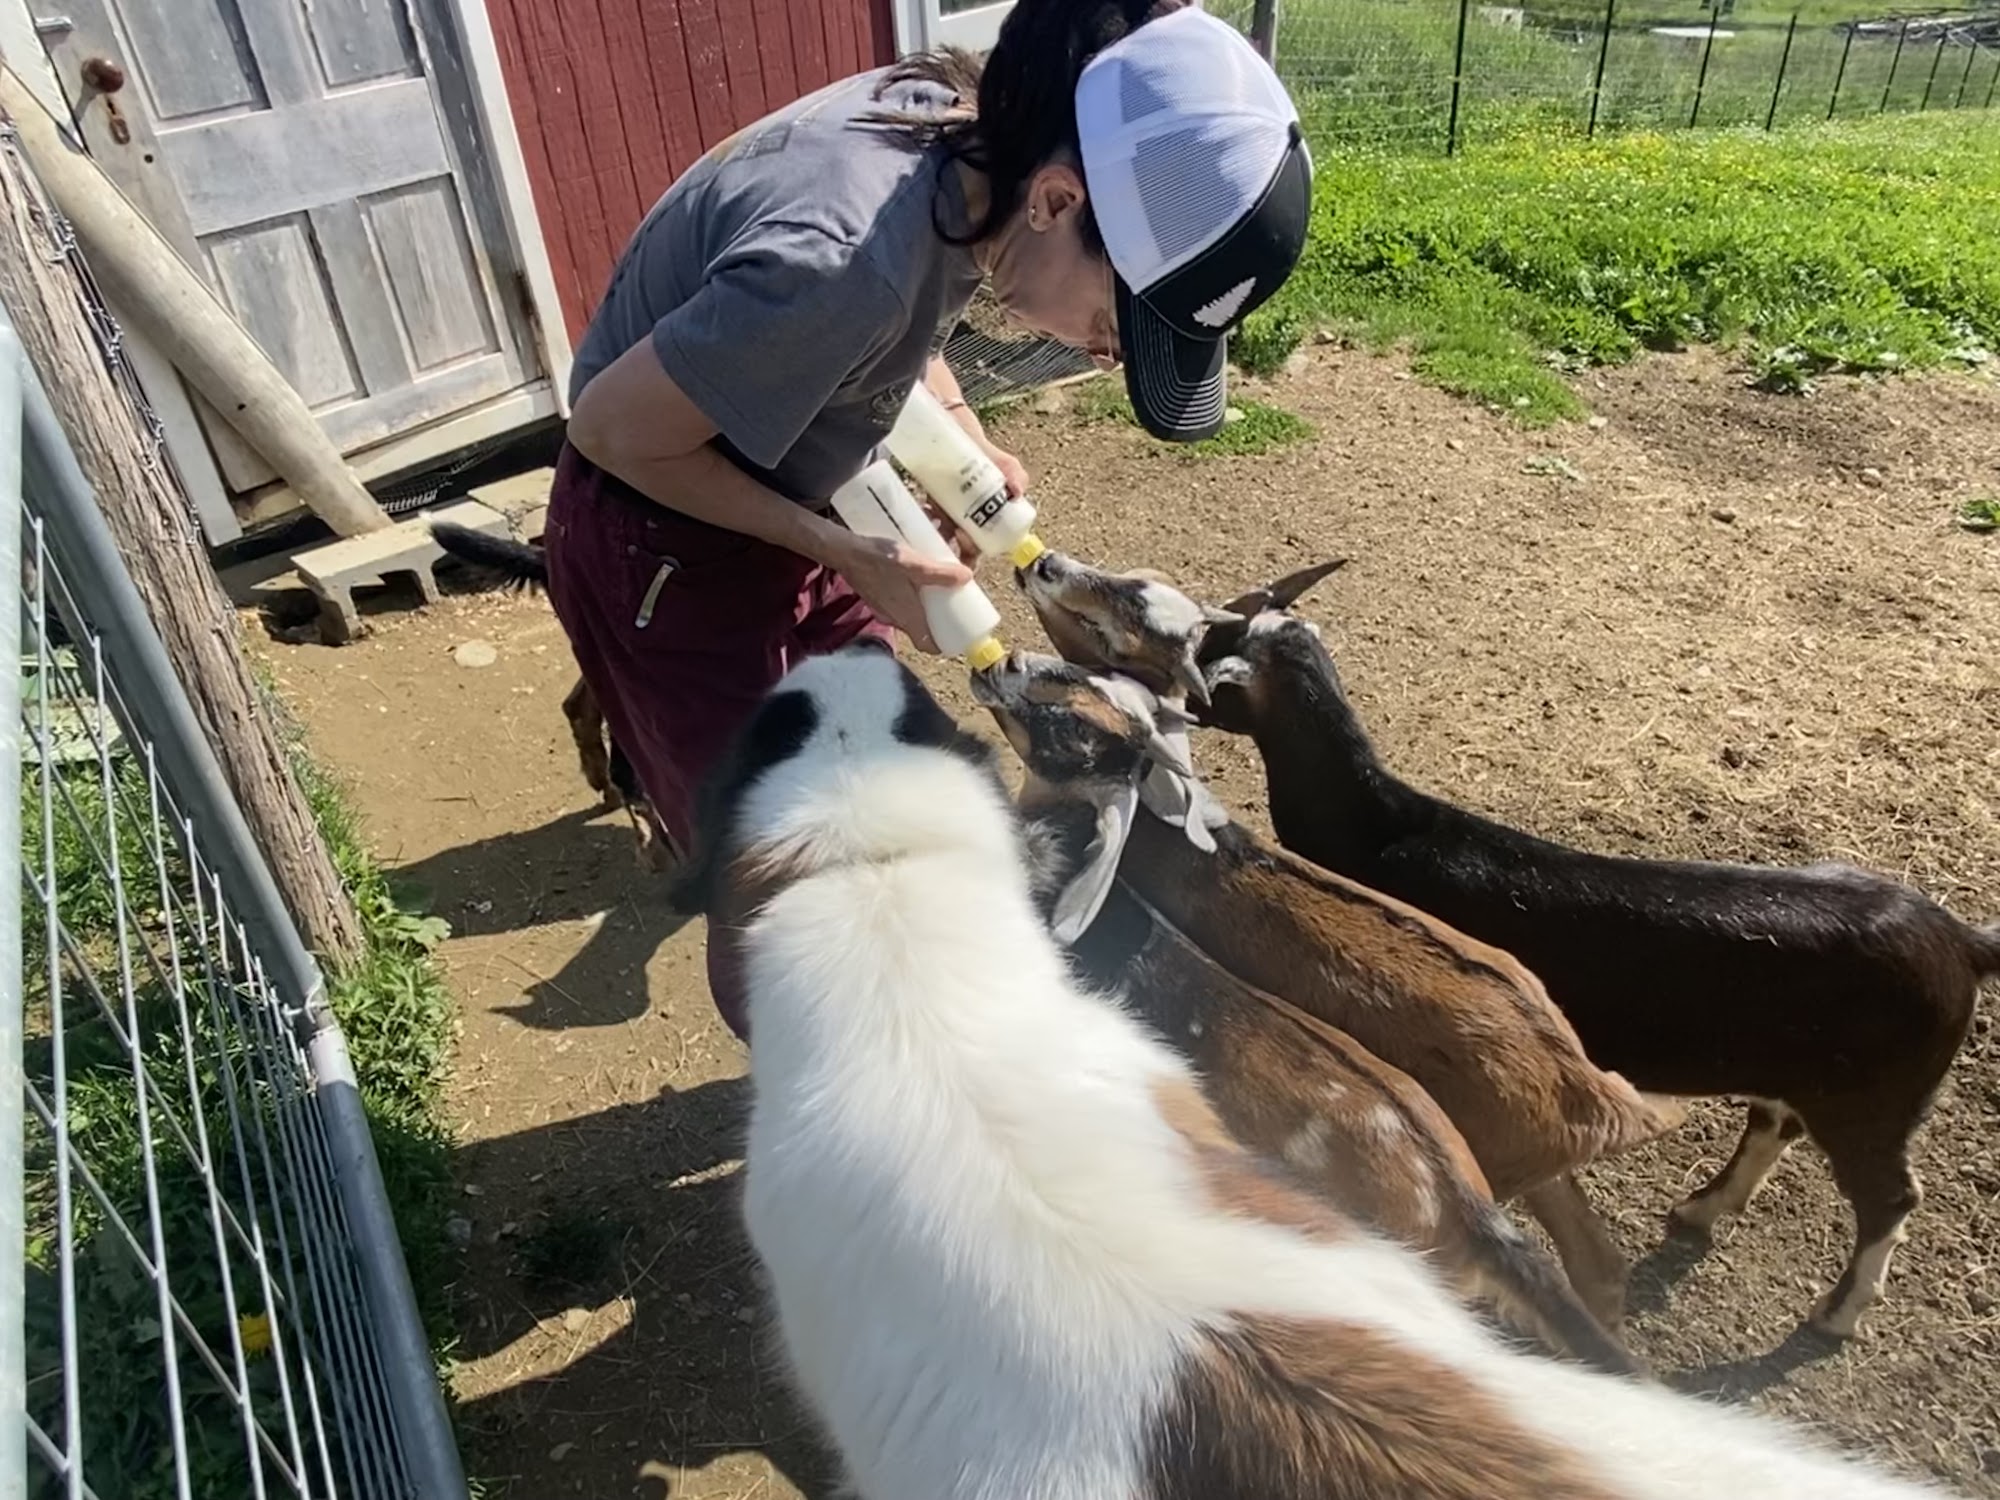 Horse And Hound Veterinary Services 22 Atlantic Hwy, Thomaston Maine 04861